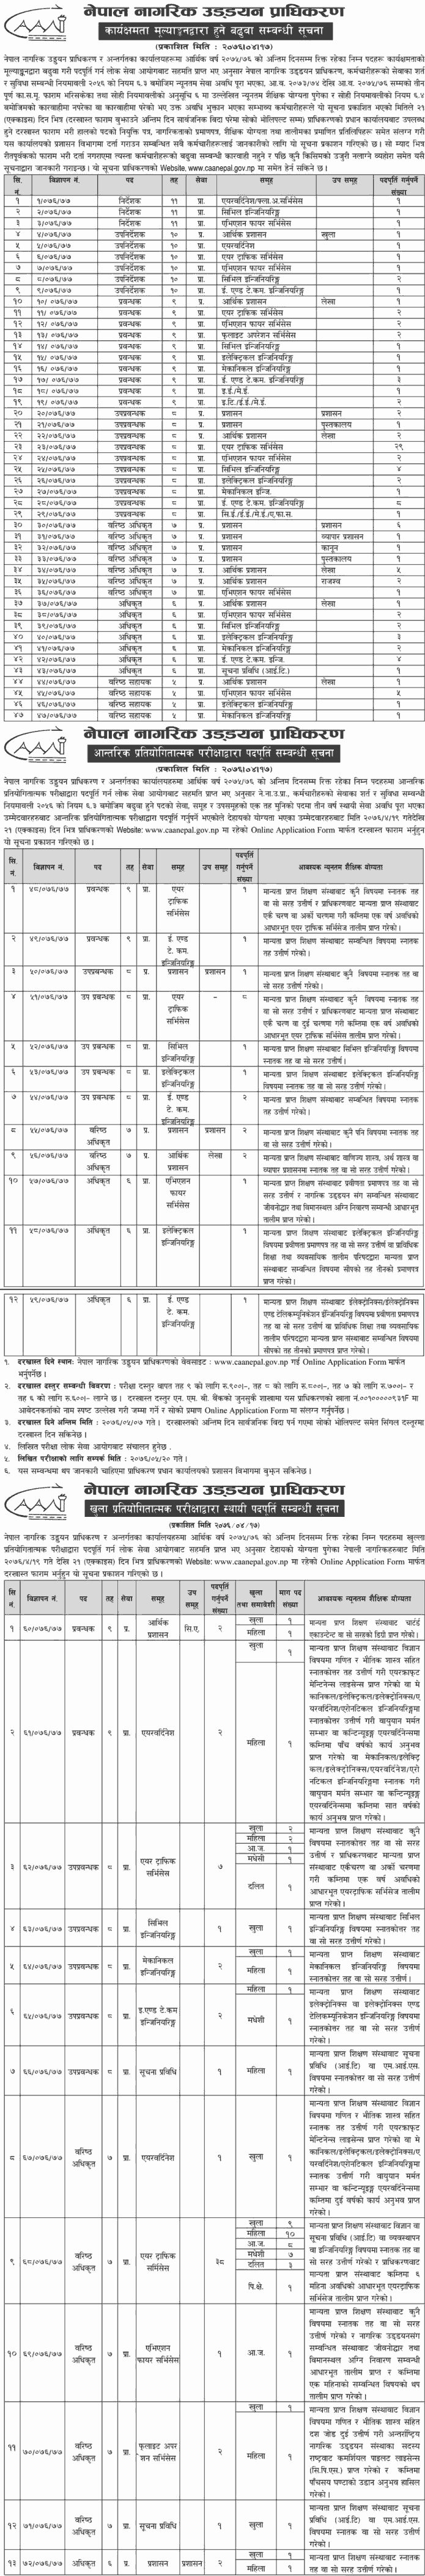 Nepal Civil Aviation Authority Vacancy